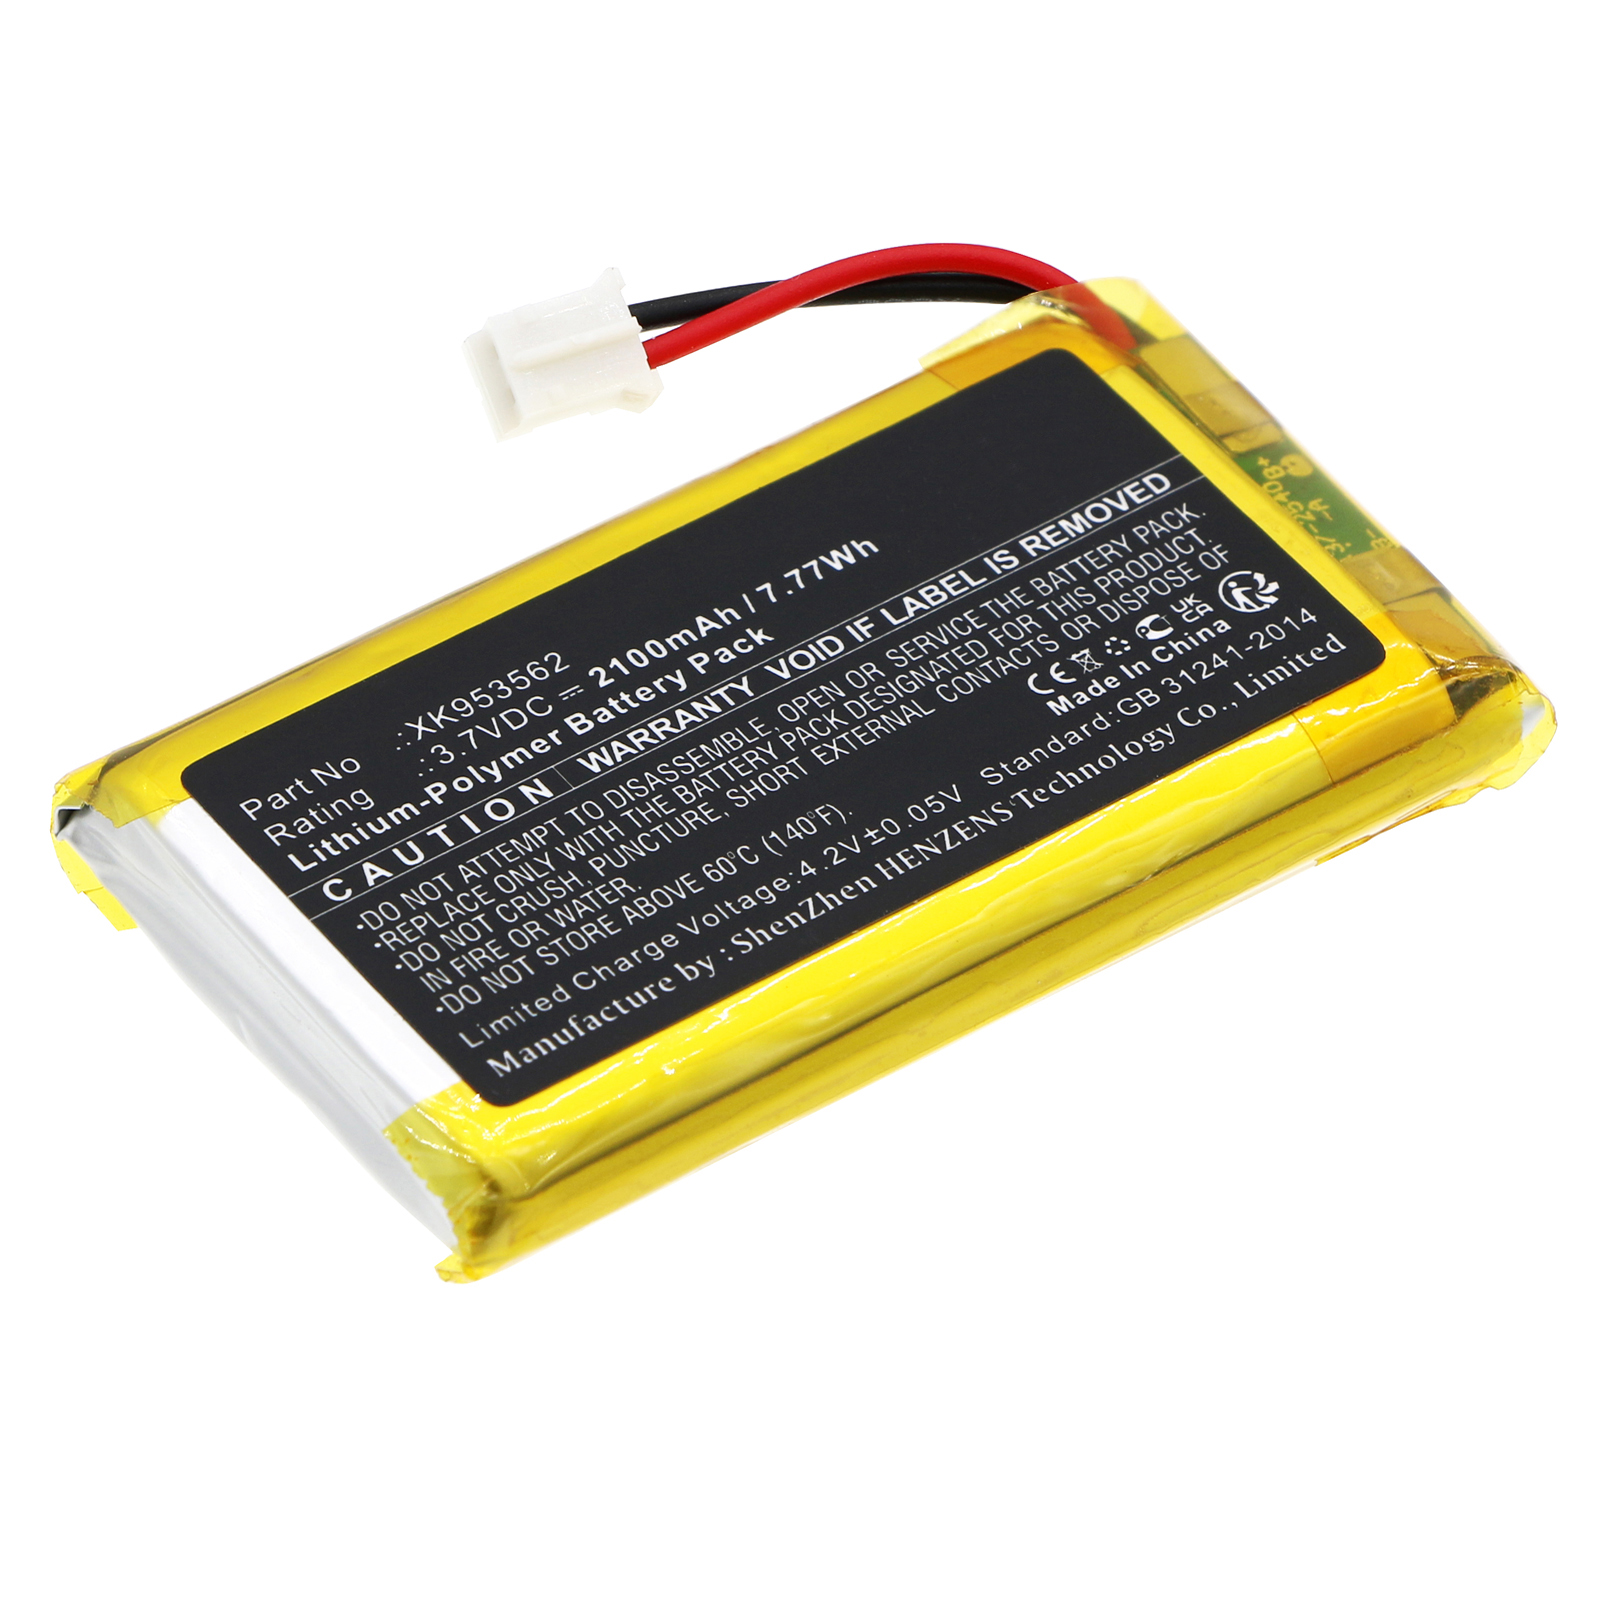 Synergy Digital Alarm System Battery, Compatible with Ajax XK953562 Alarm System Battery (Li-Pol, 3.7V, 2100mAh)